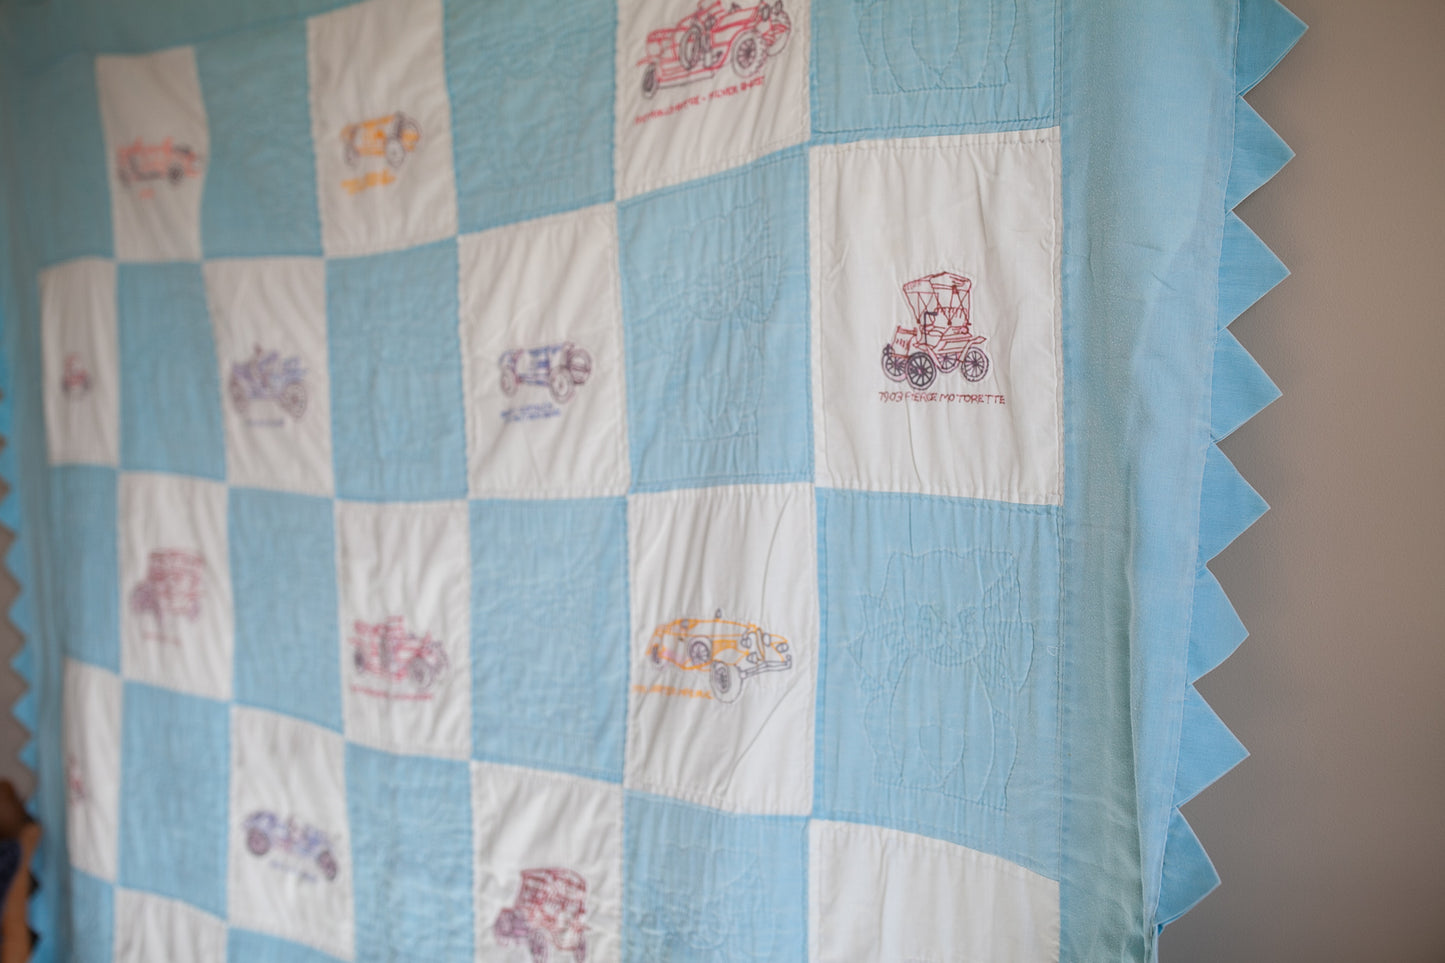 Vintage Quilt - Blue and White Quilt - Car Quilt - Boys Room Quilt